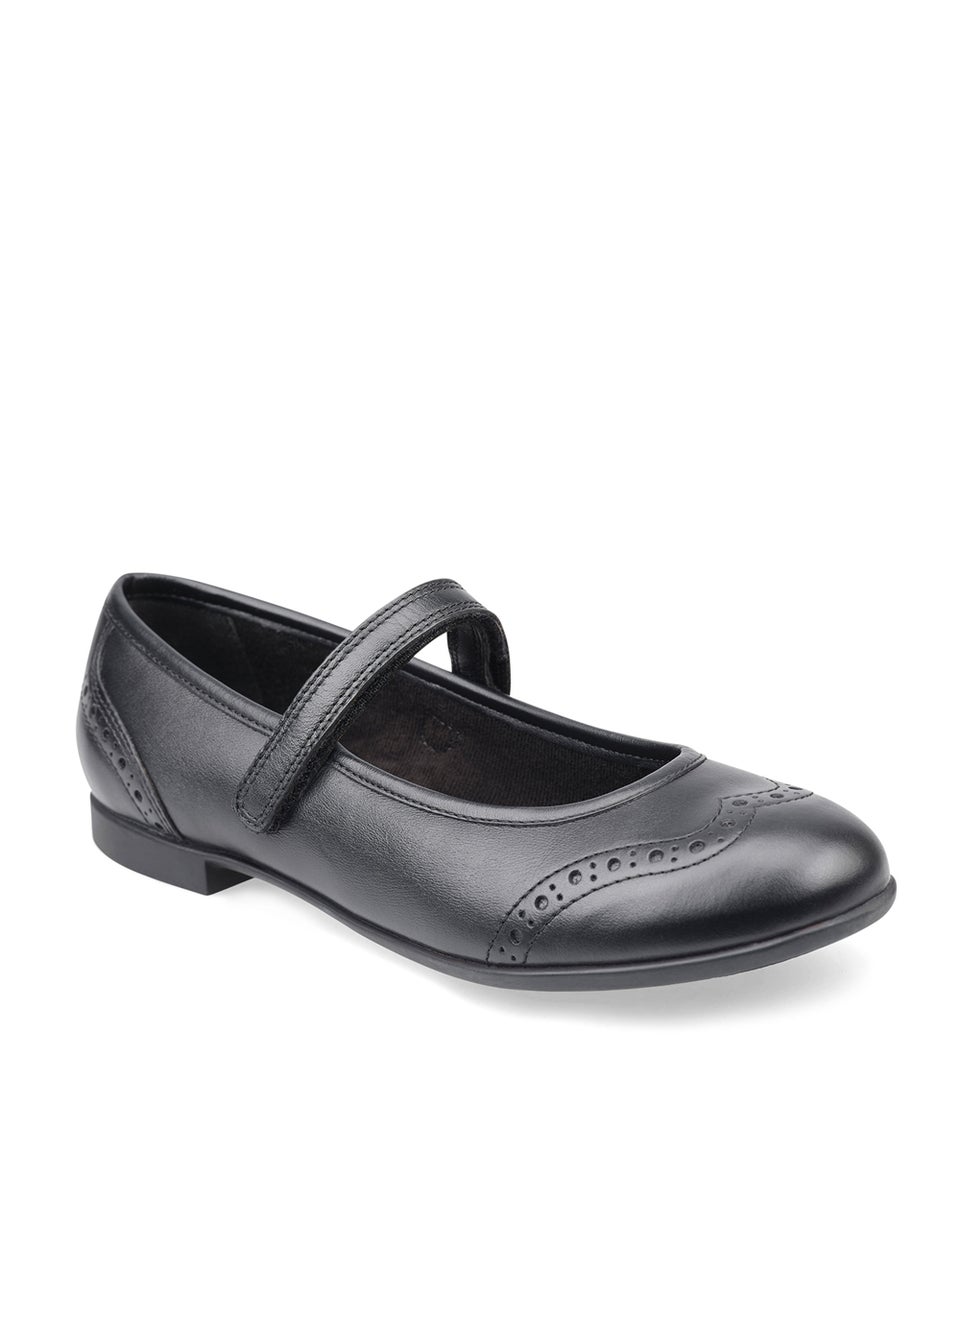 Start-Rite Black Impress Leather School Shoes (Standard Fit)